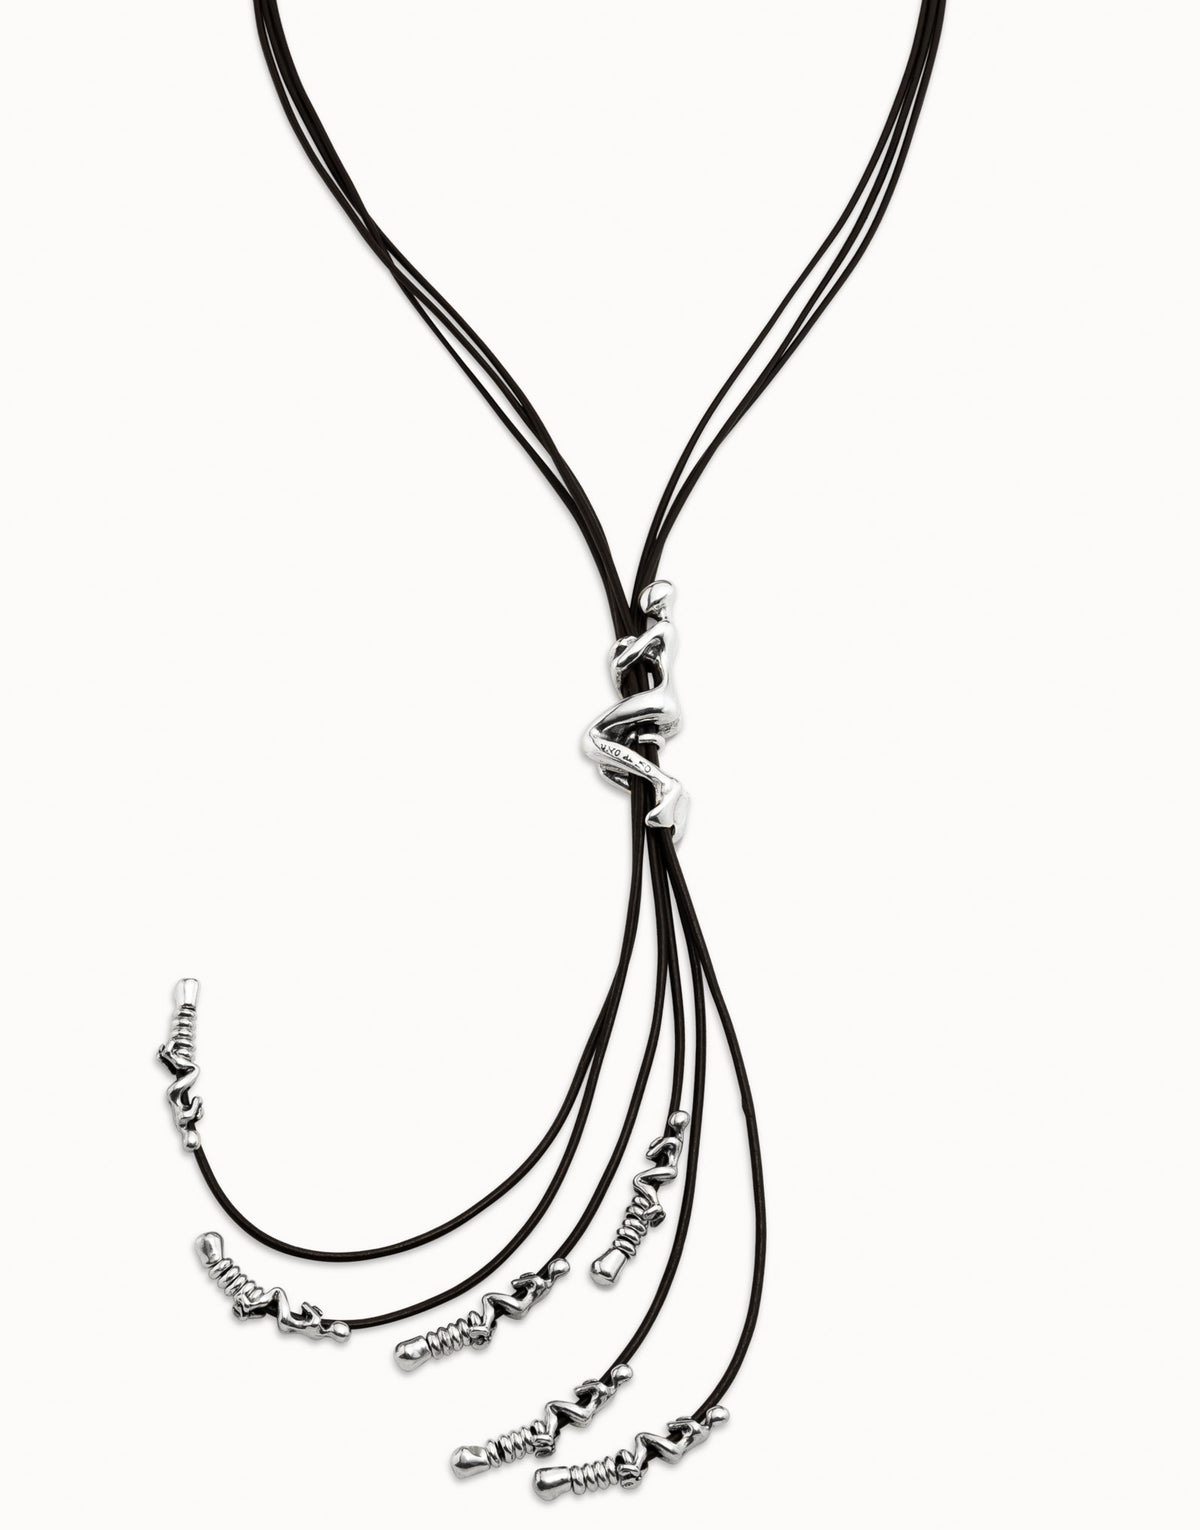 Skalator Silver Necklace